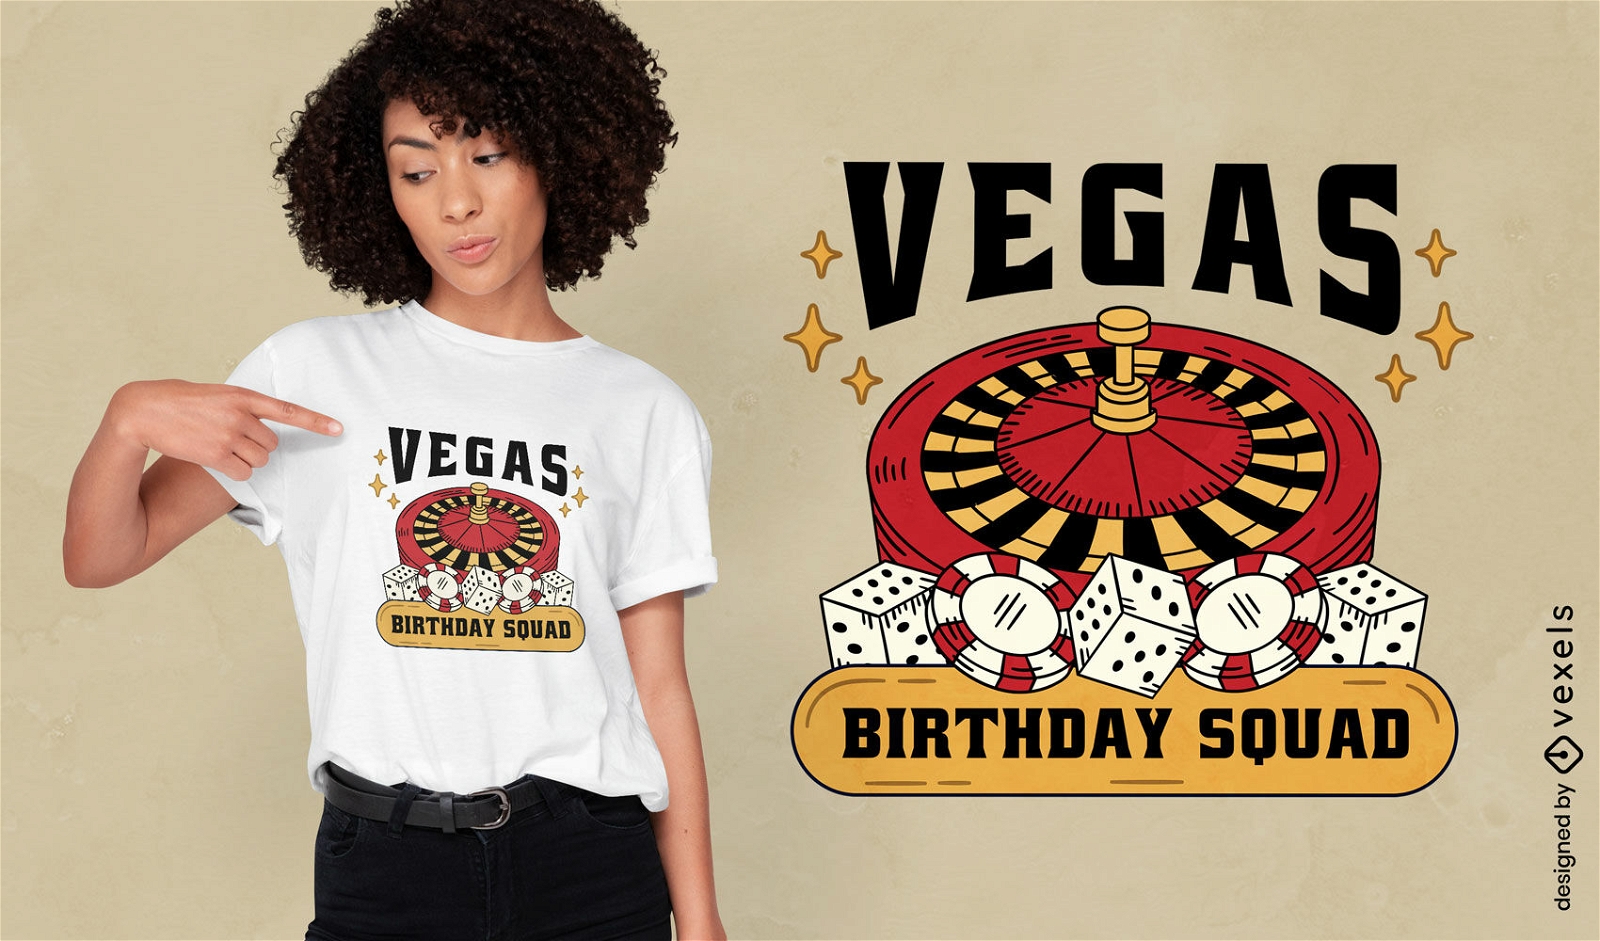 Vegas birthday celebration t-shirt design